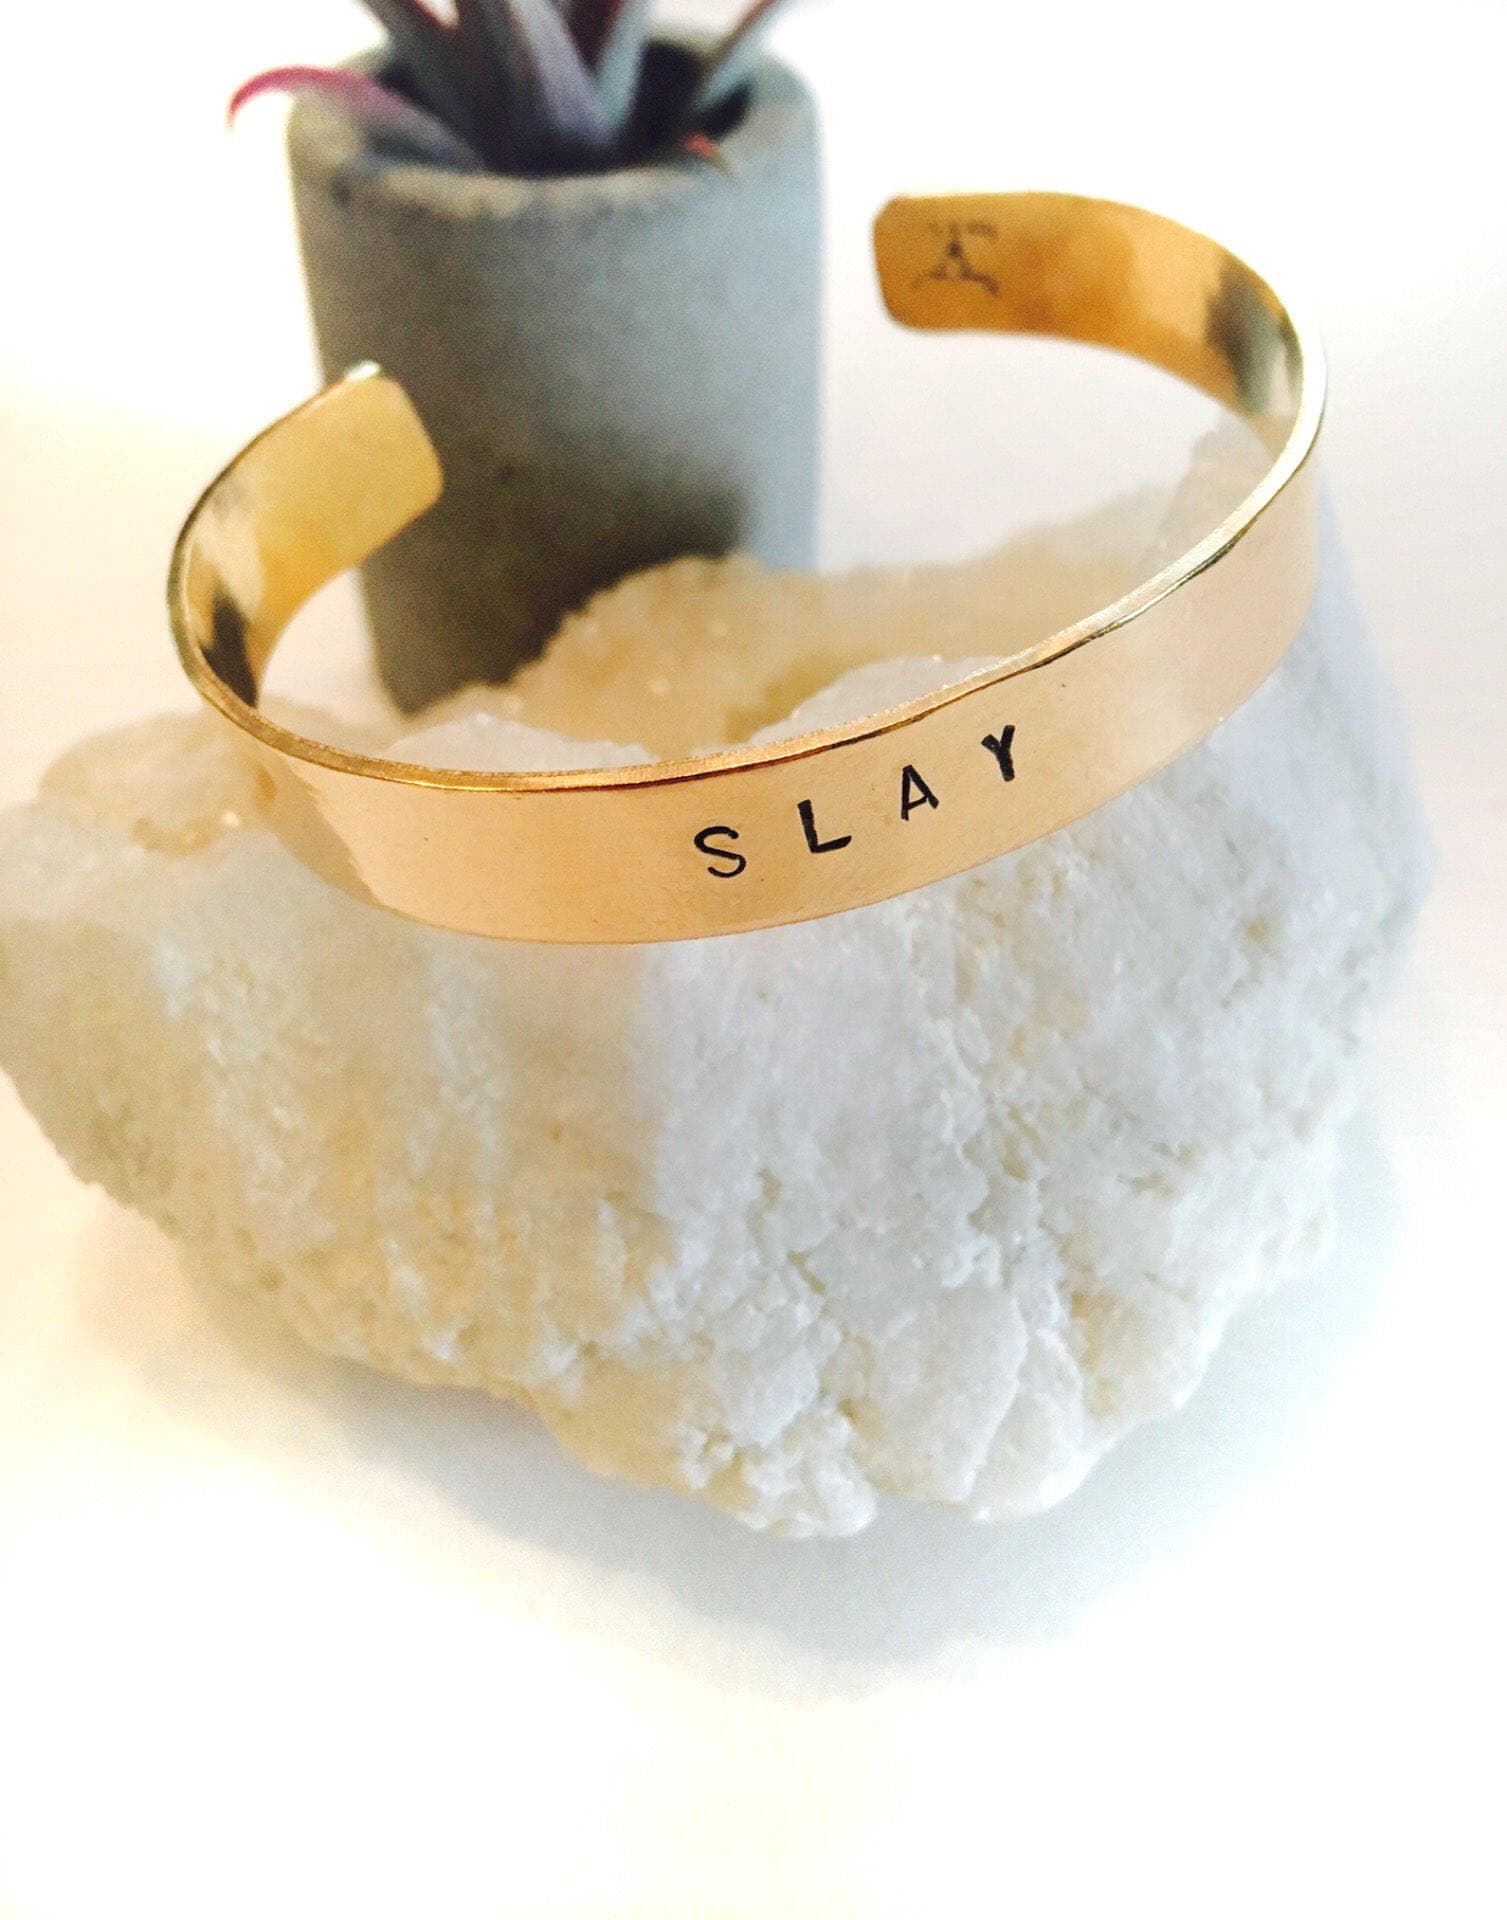 SLAY cuff// metal stamped bracelet// inspirational jewelry// metal cuff// gold cuff// sterling silver cuff// slay all day// women